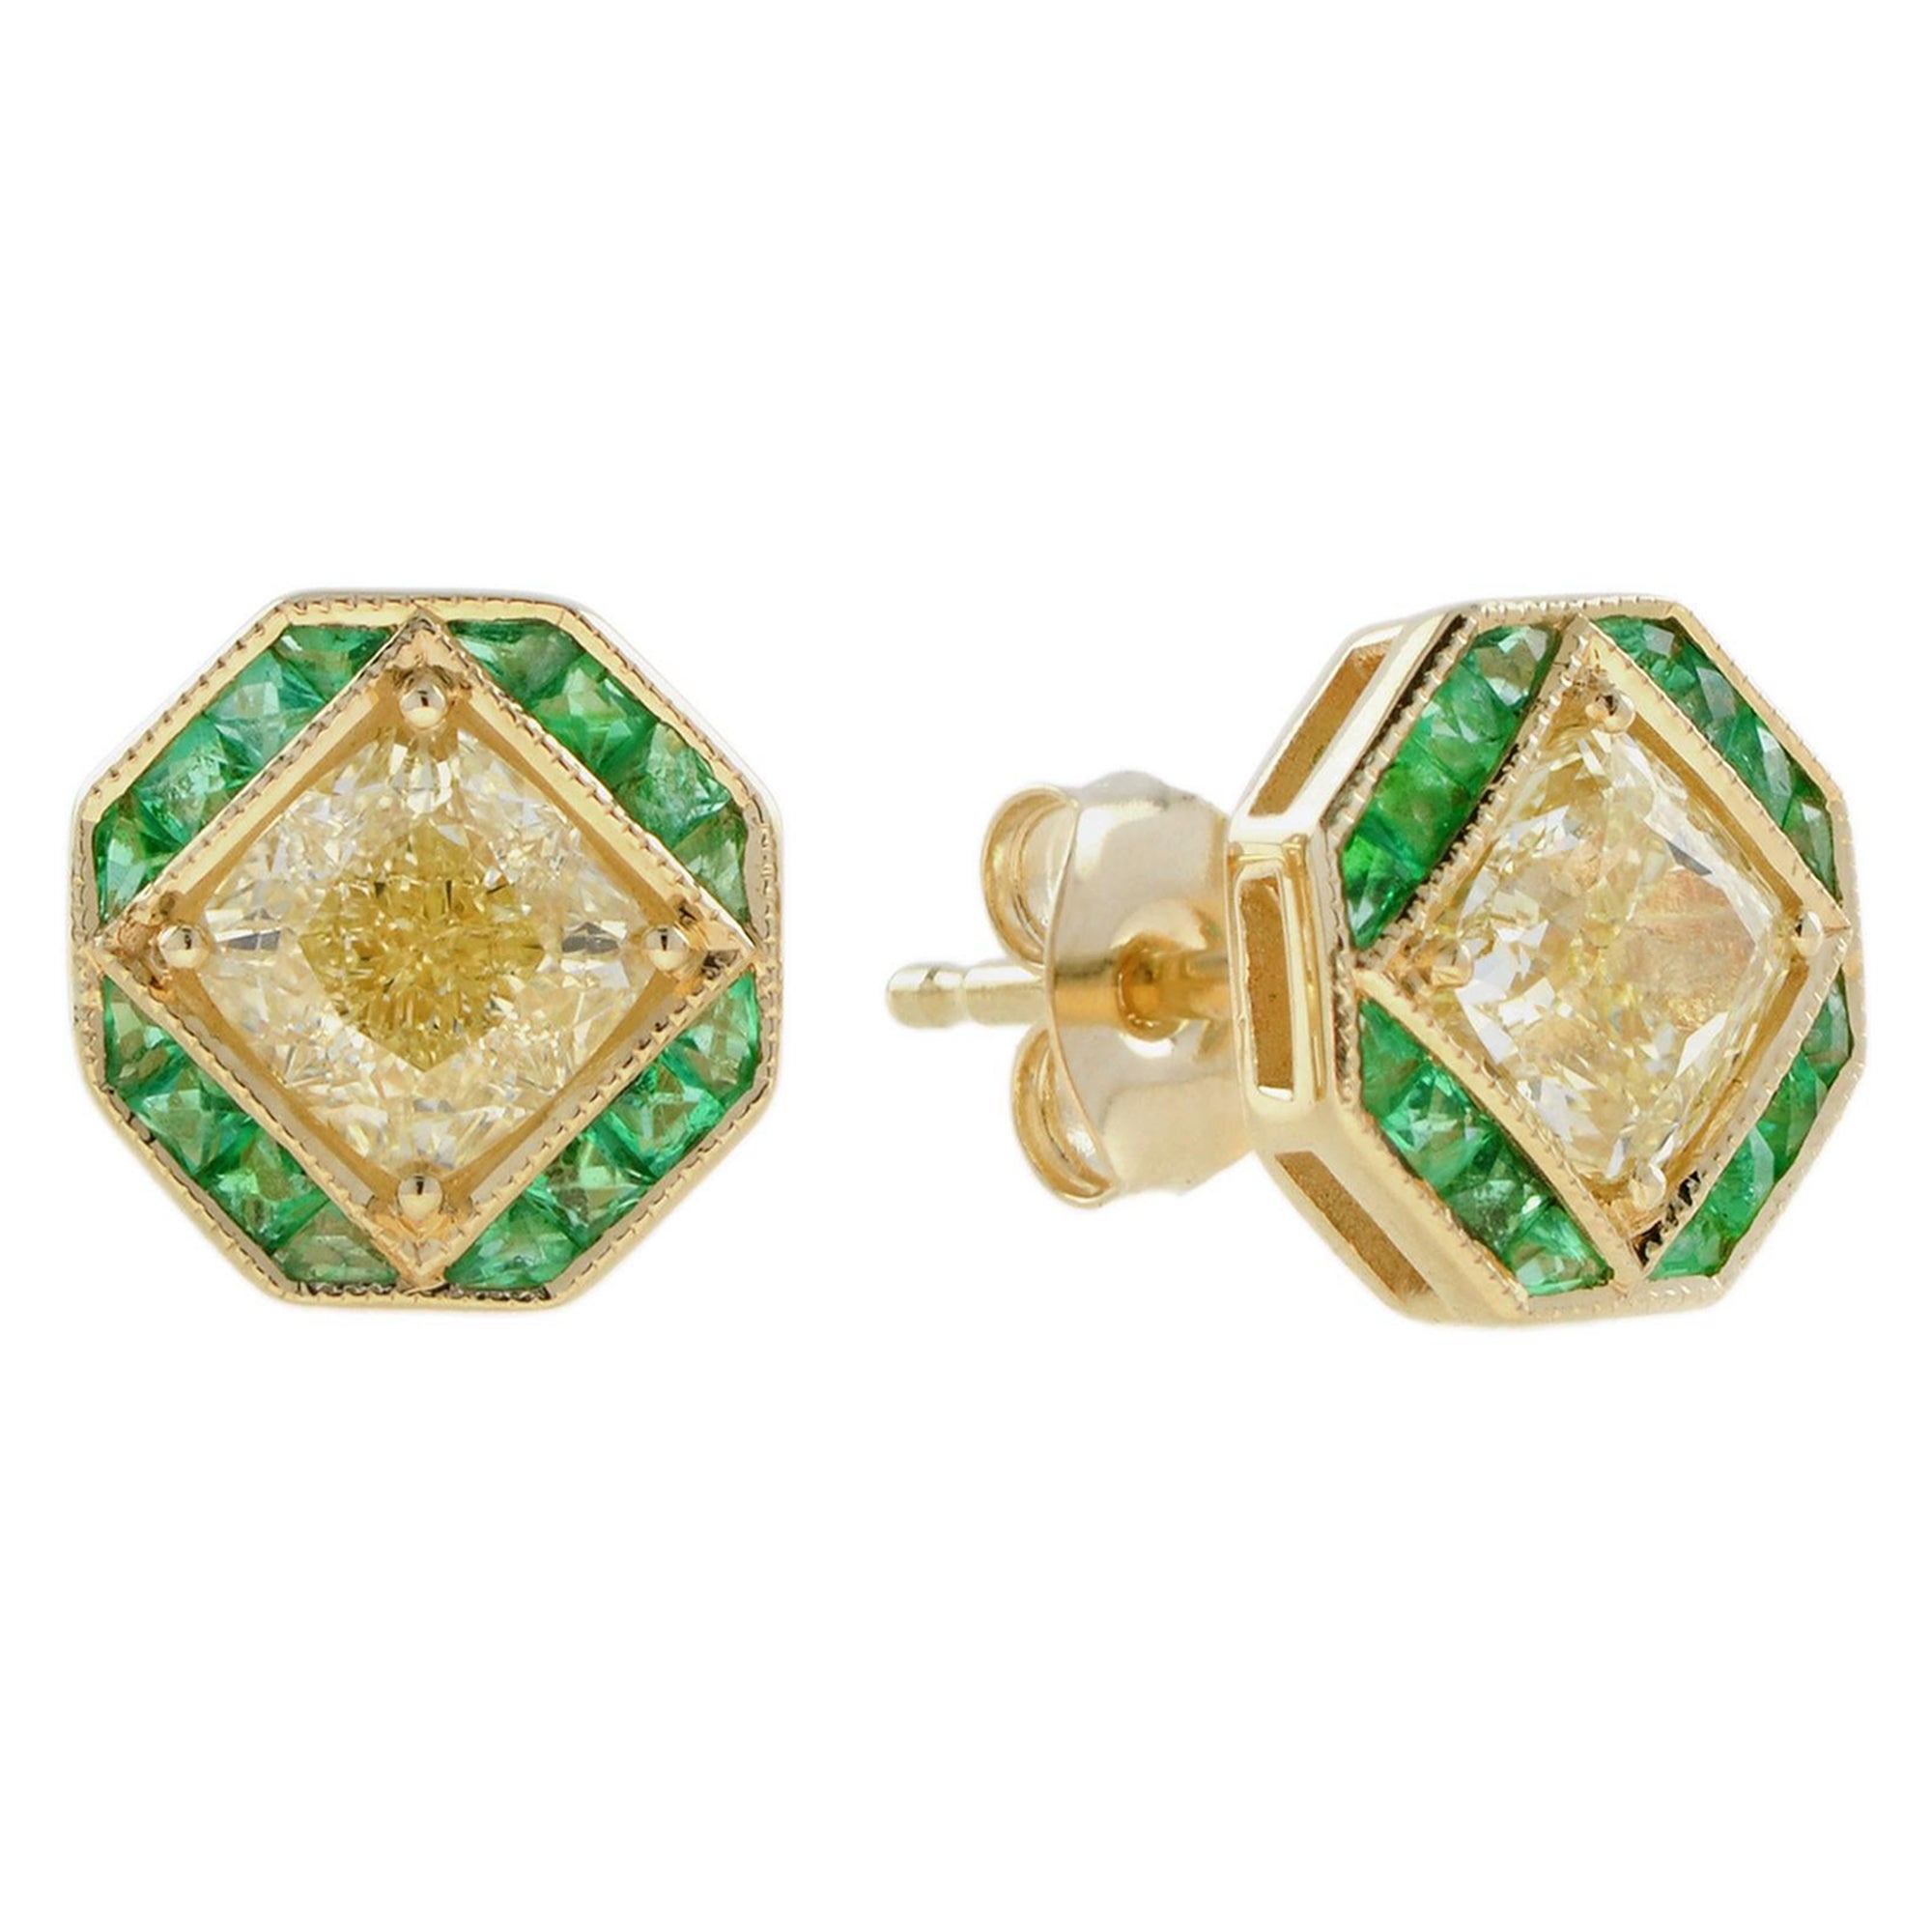 GIA Diamond and Emerald Art Deco Style Stud Earrings in 18k Yellow Gold